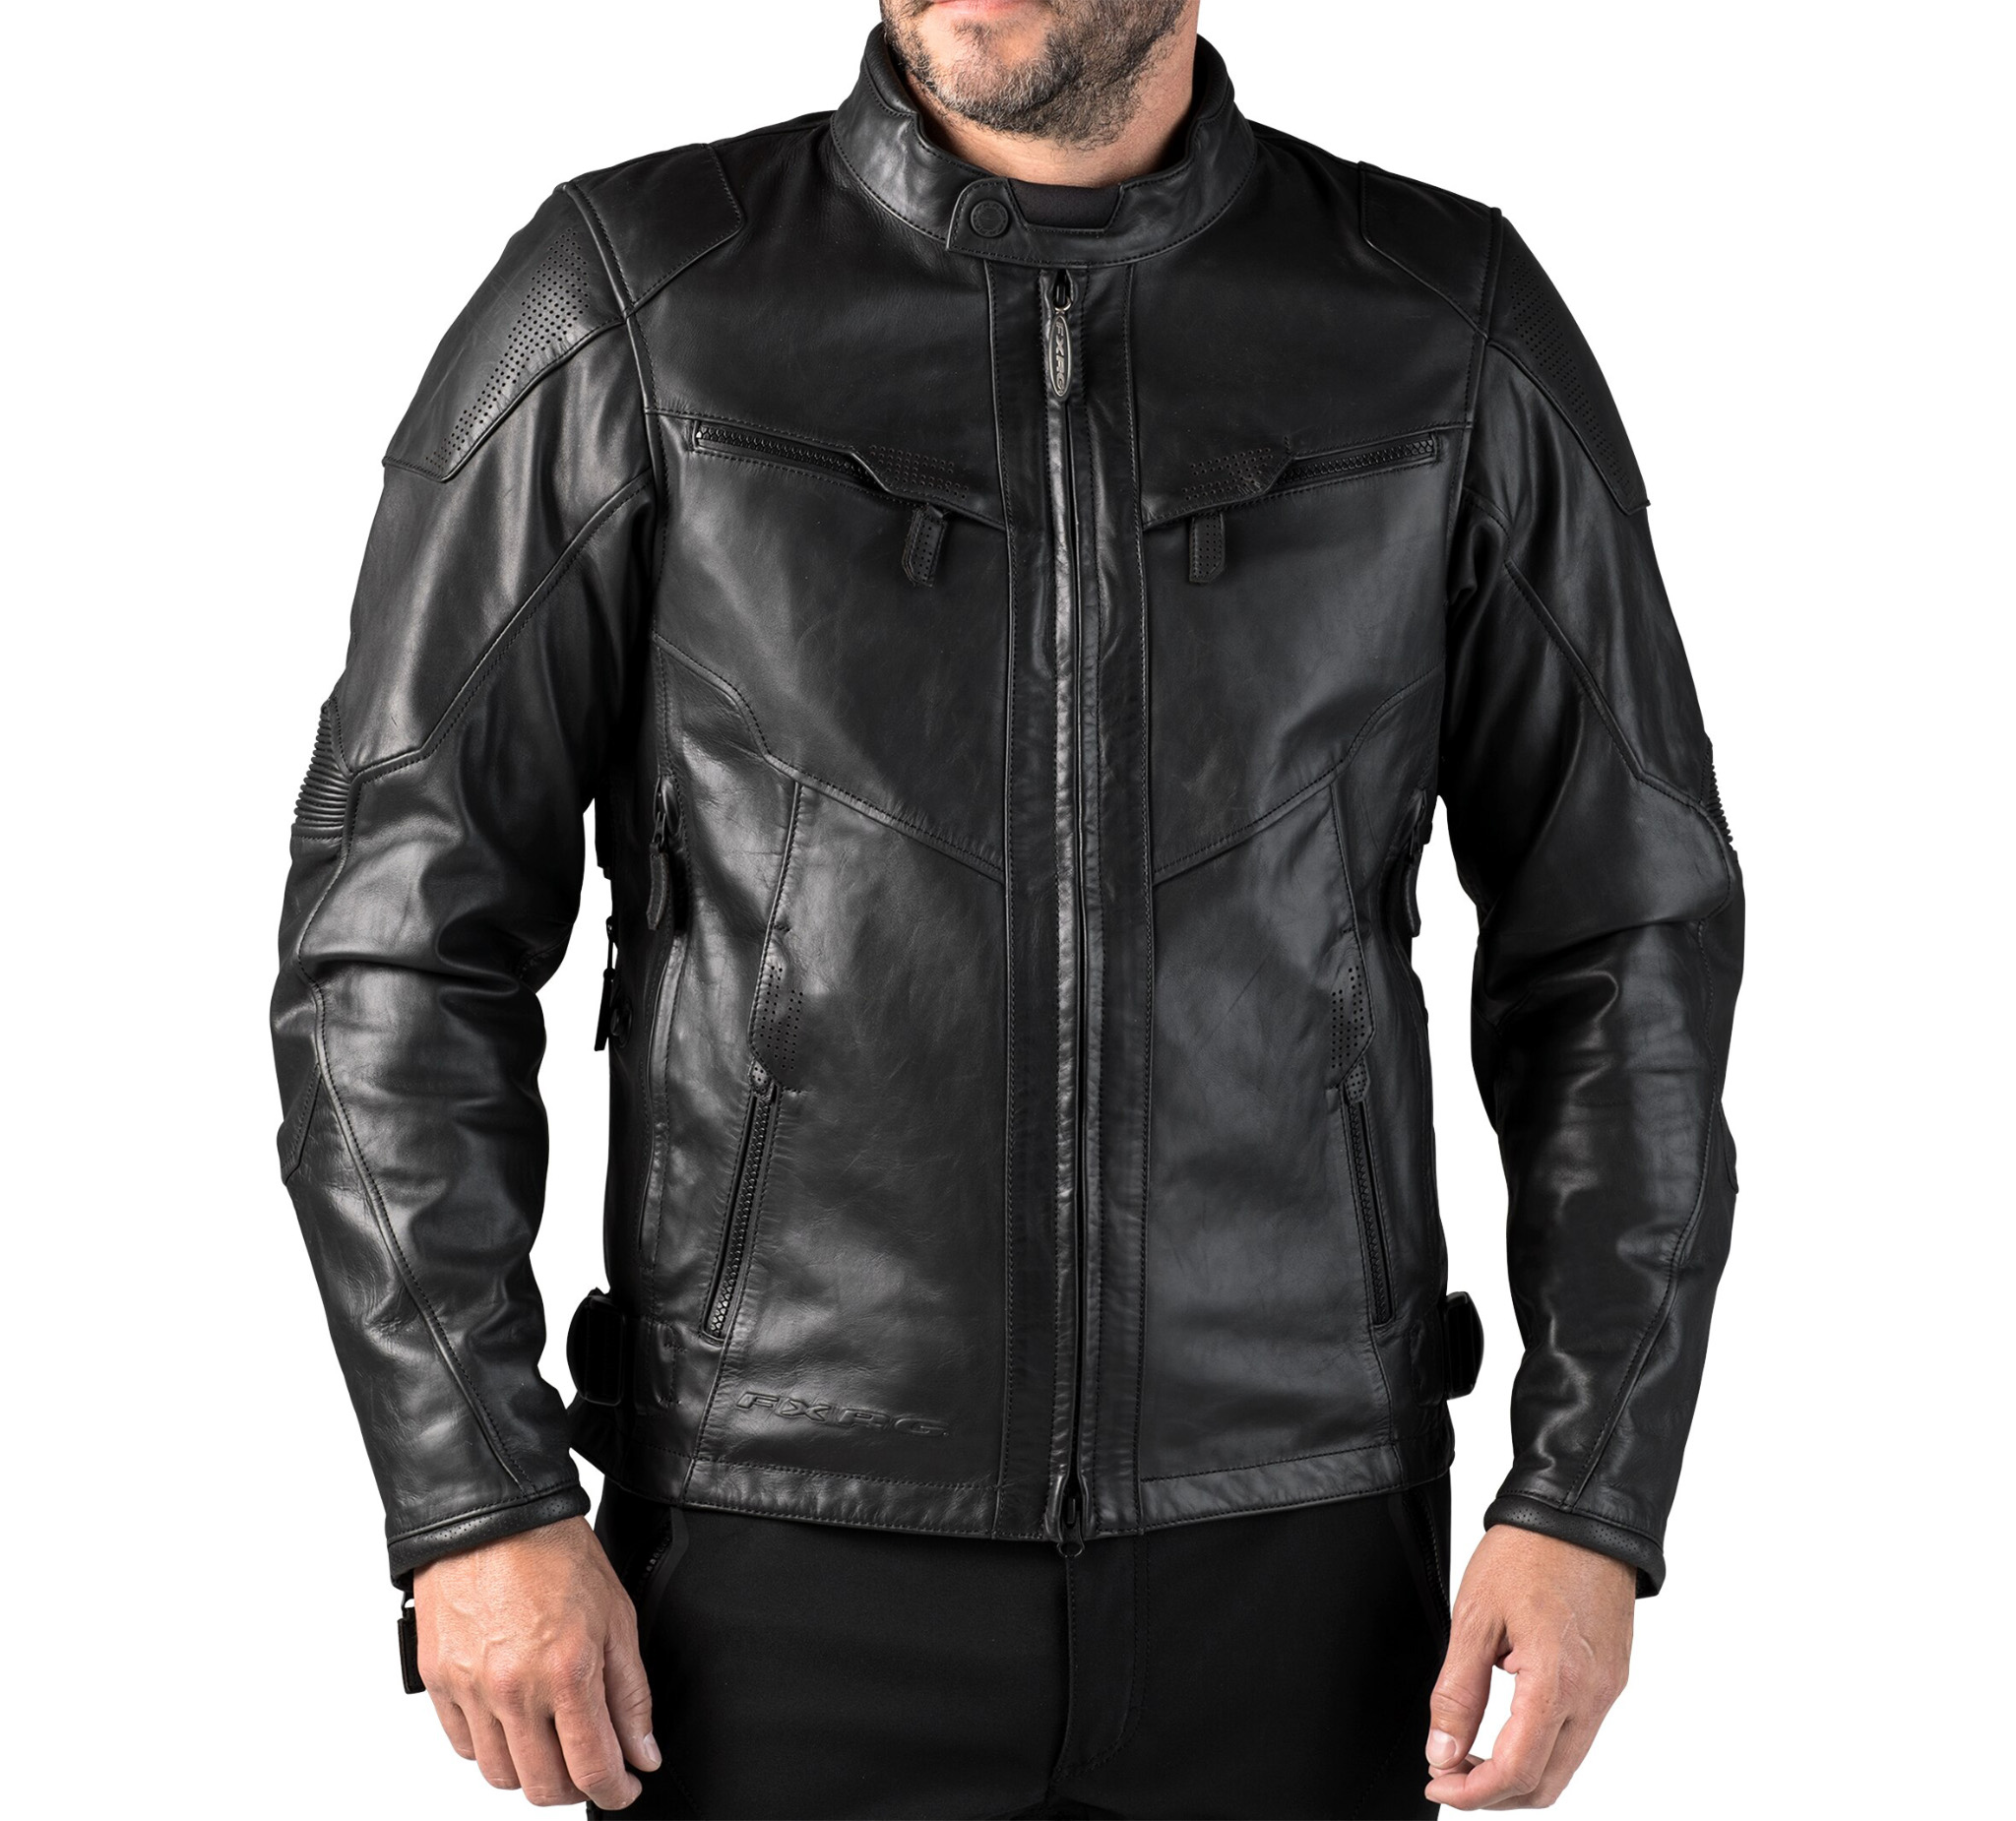 Harley Davidson FXRG Leather Motorcycle Jacket, Black, X-Large Size XL -  $479 - From Shop